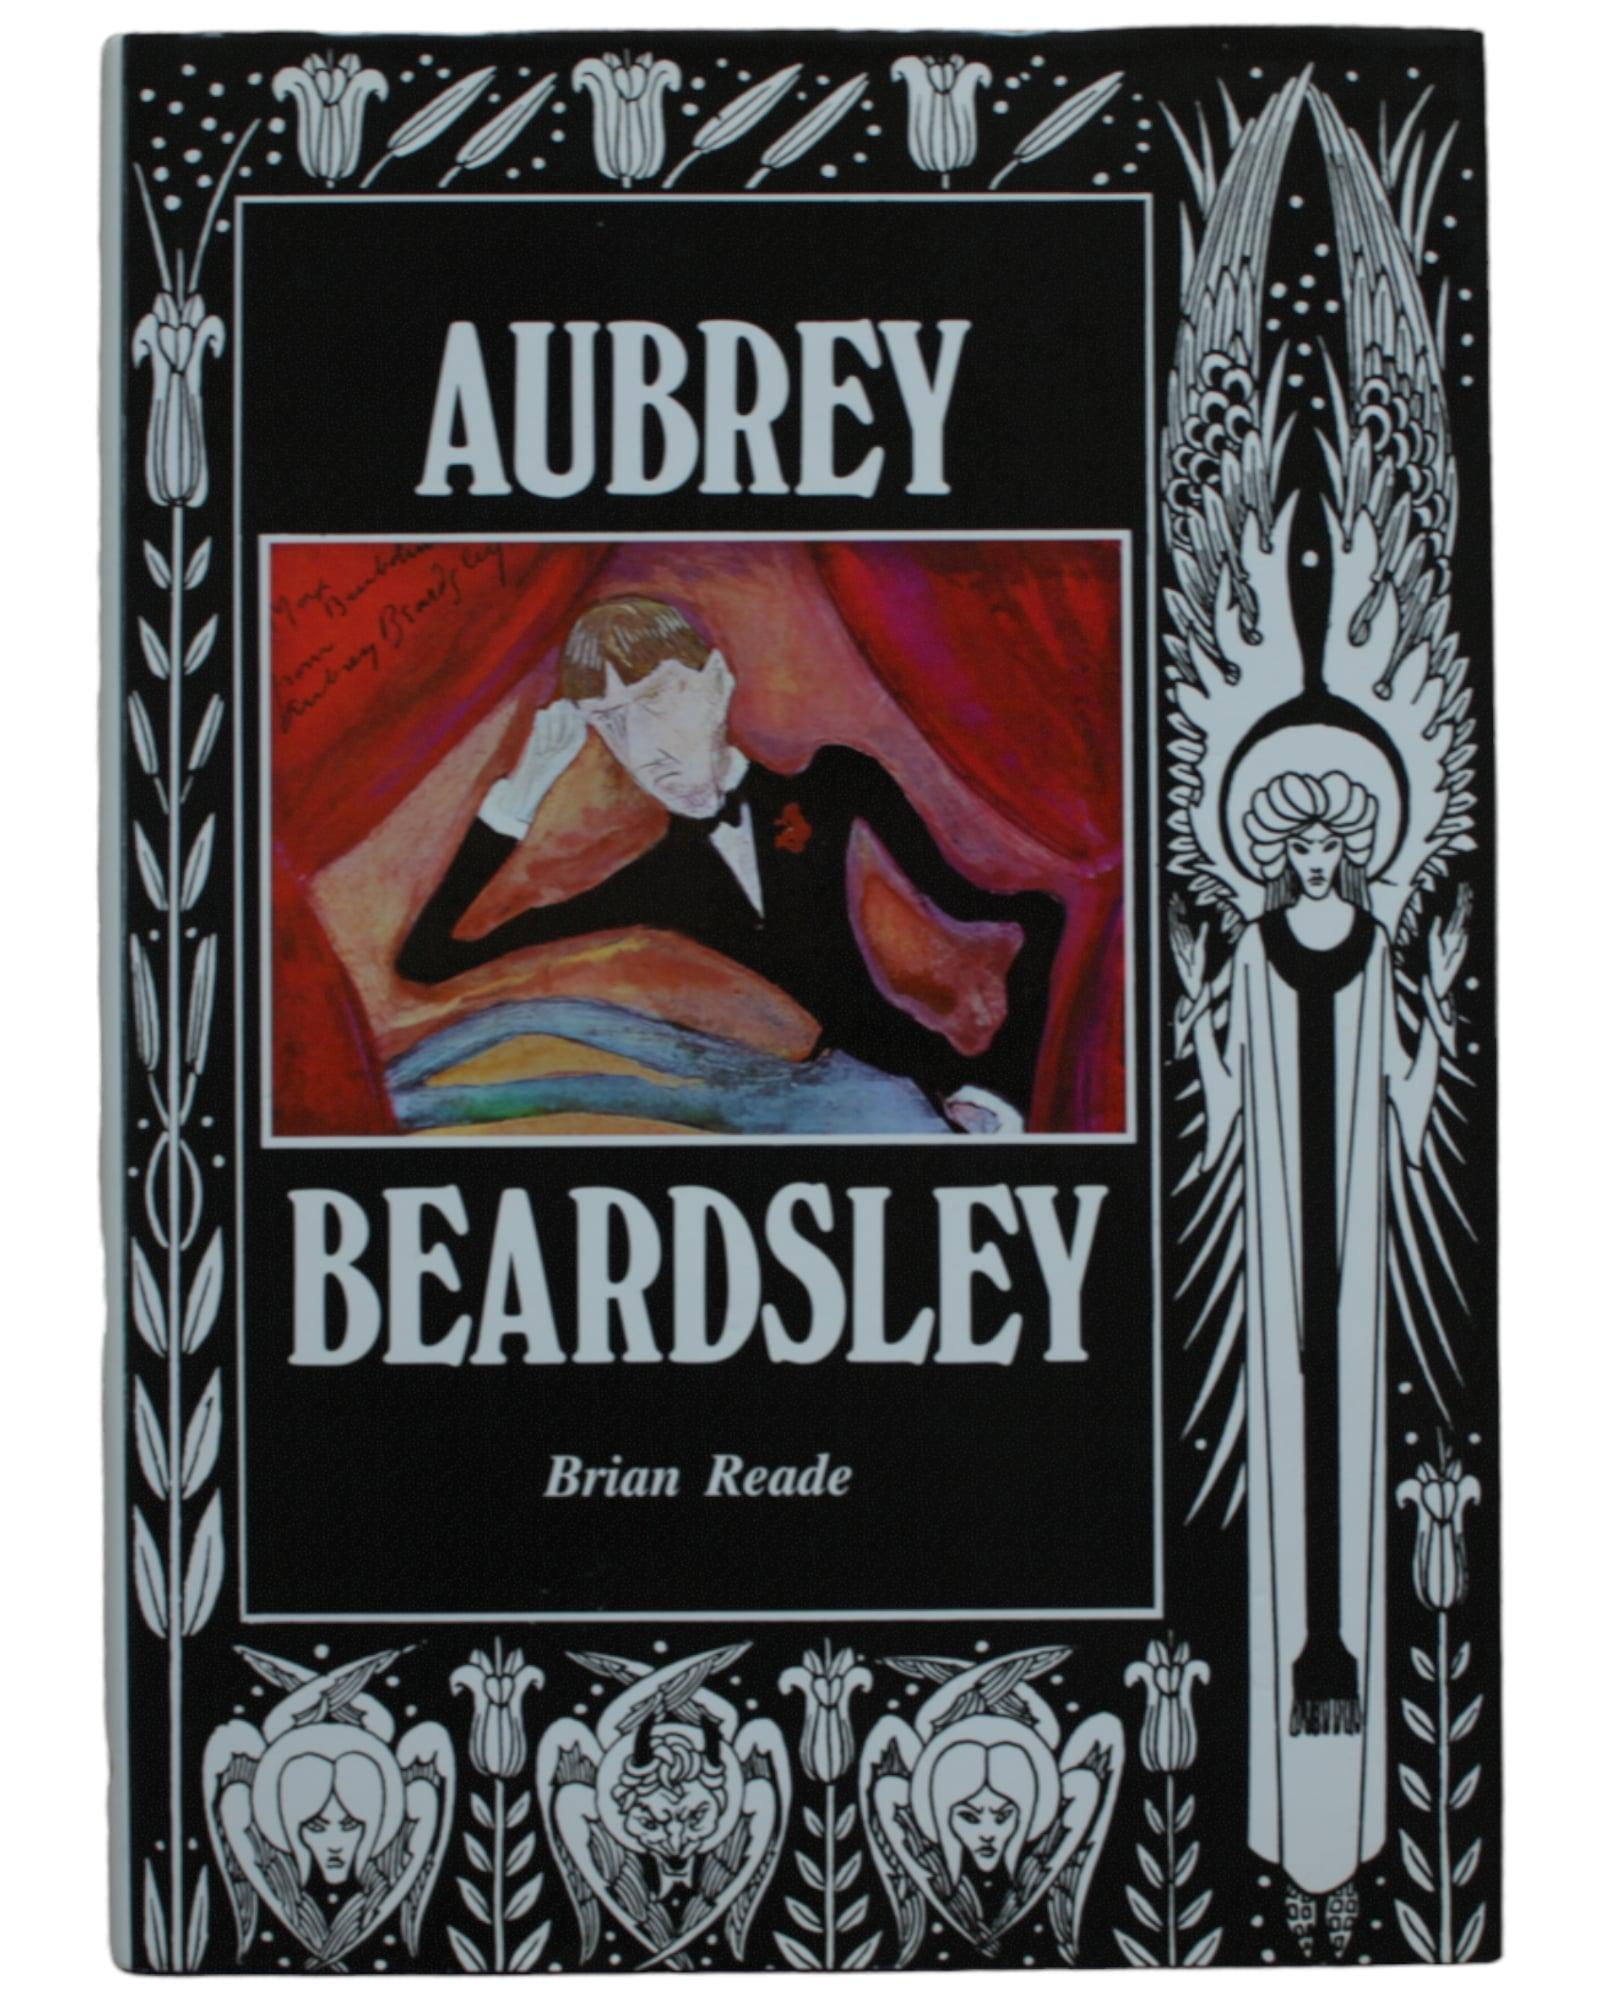 Aesthetic Movement Aubrey Beardsley, Brian Reade, Hardcover, 1998, Art Book For Sale